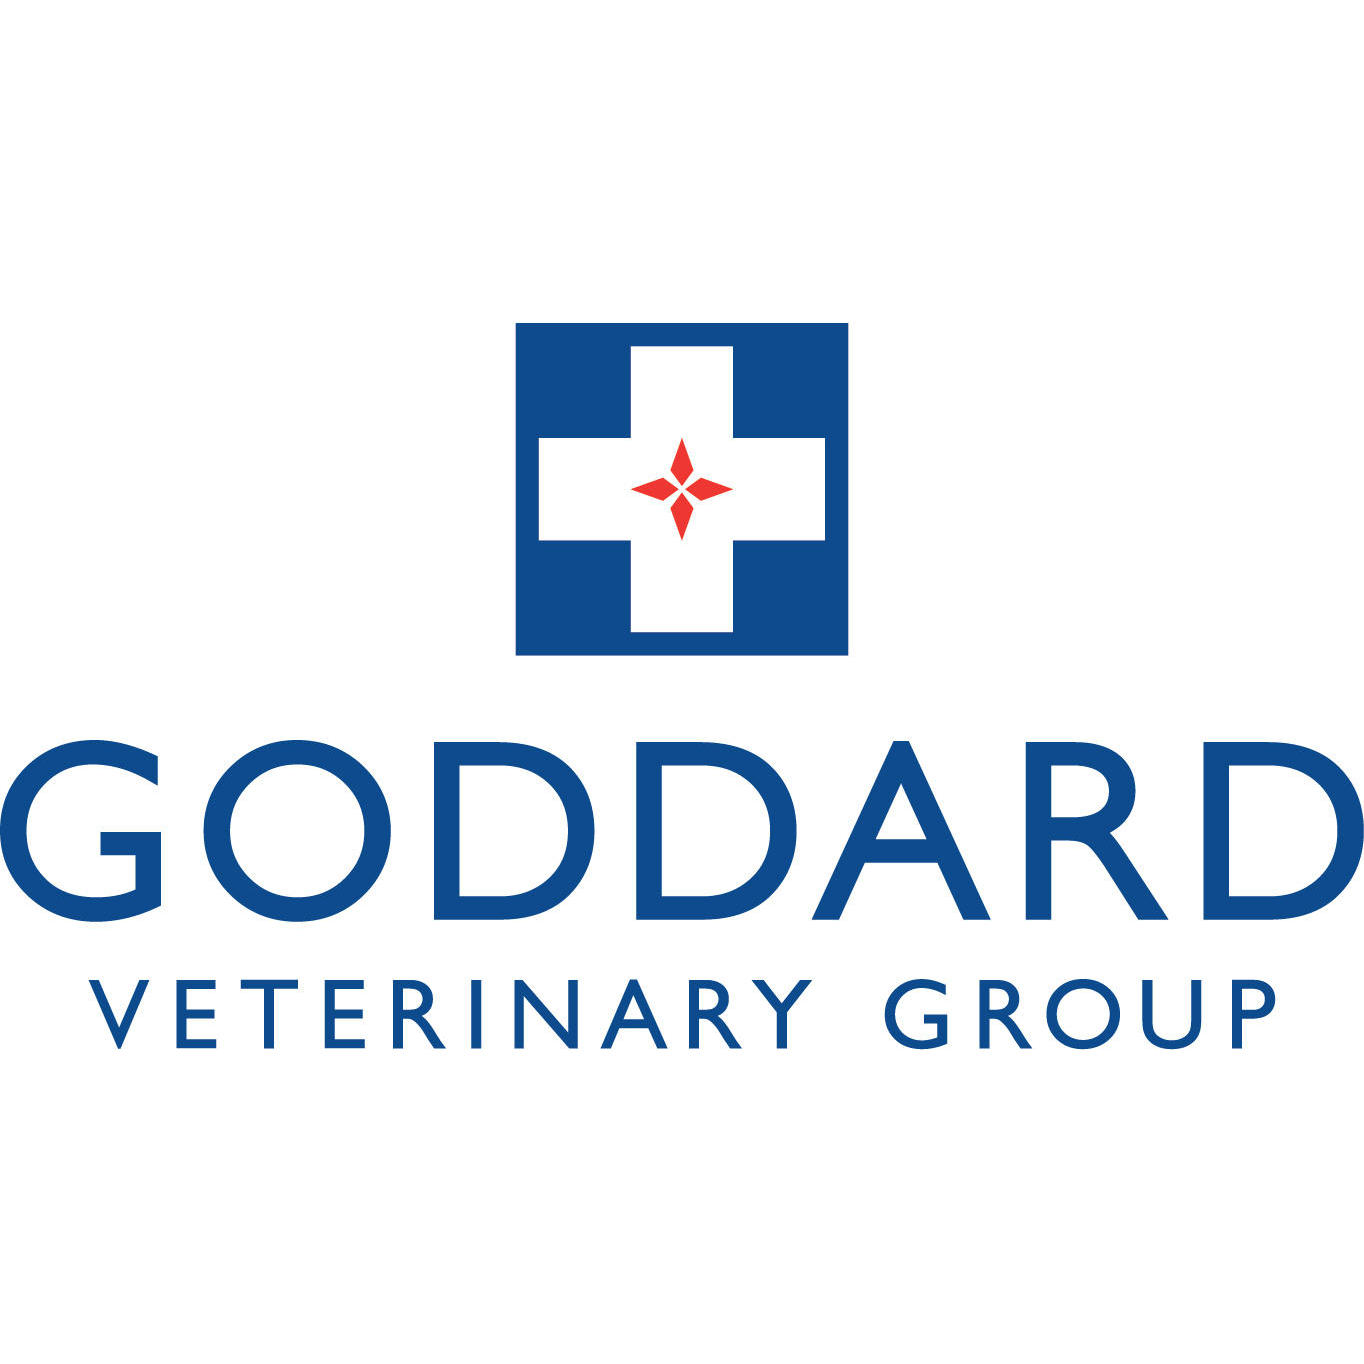 Goddard Veterinary Group, Croydon - Croydon, London CR0 7AF - 020 8654 3887 | ShowMeLocal.com